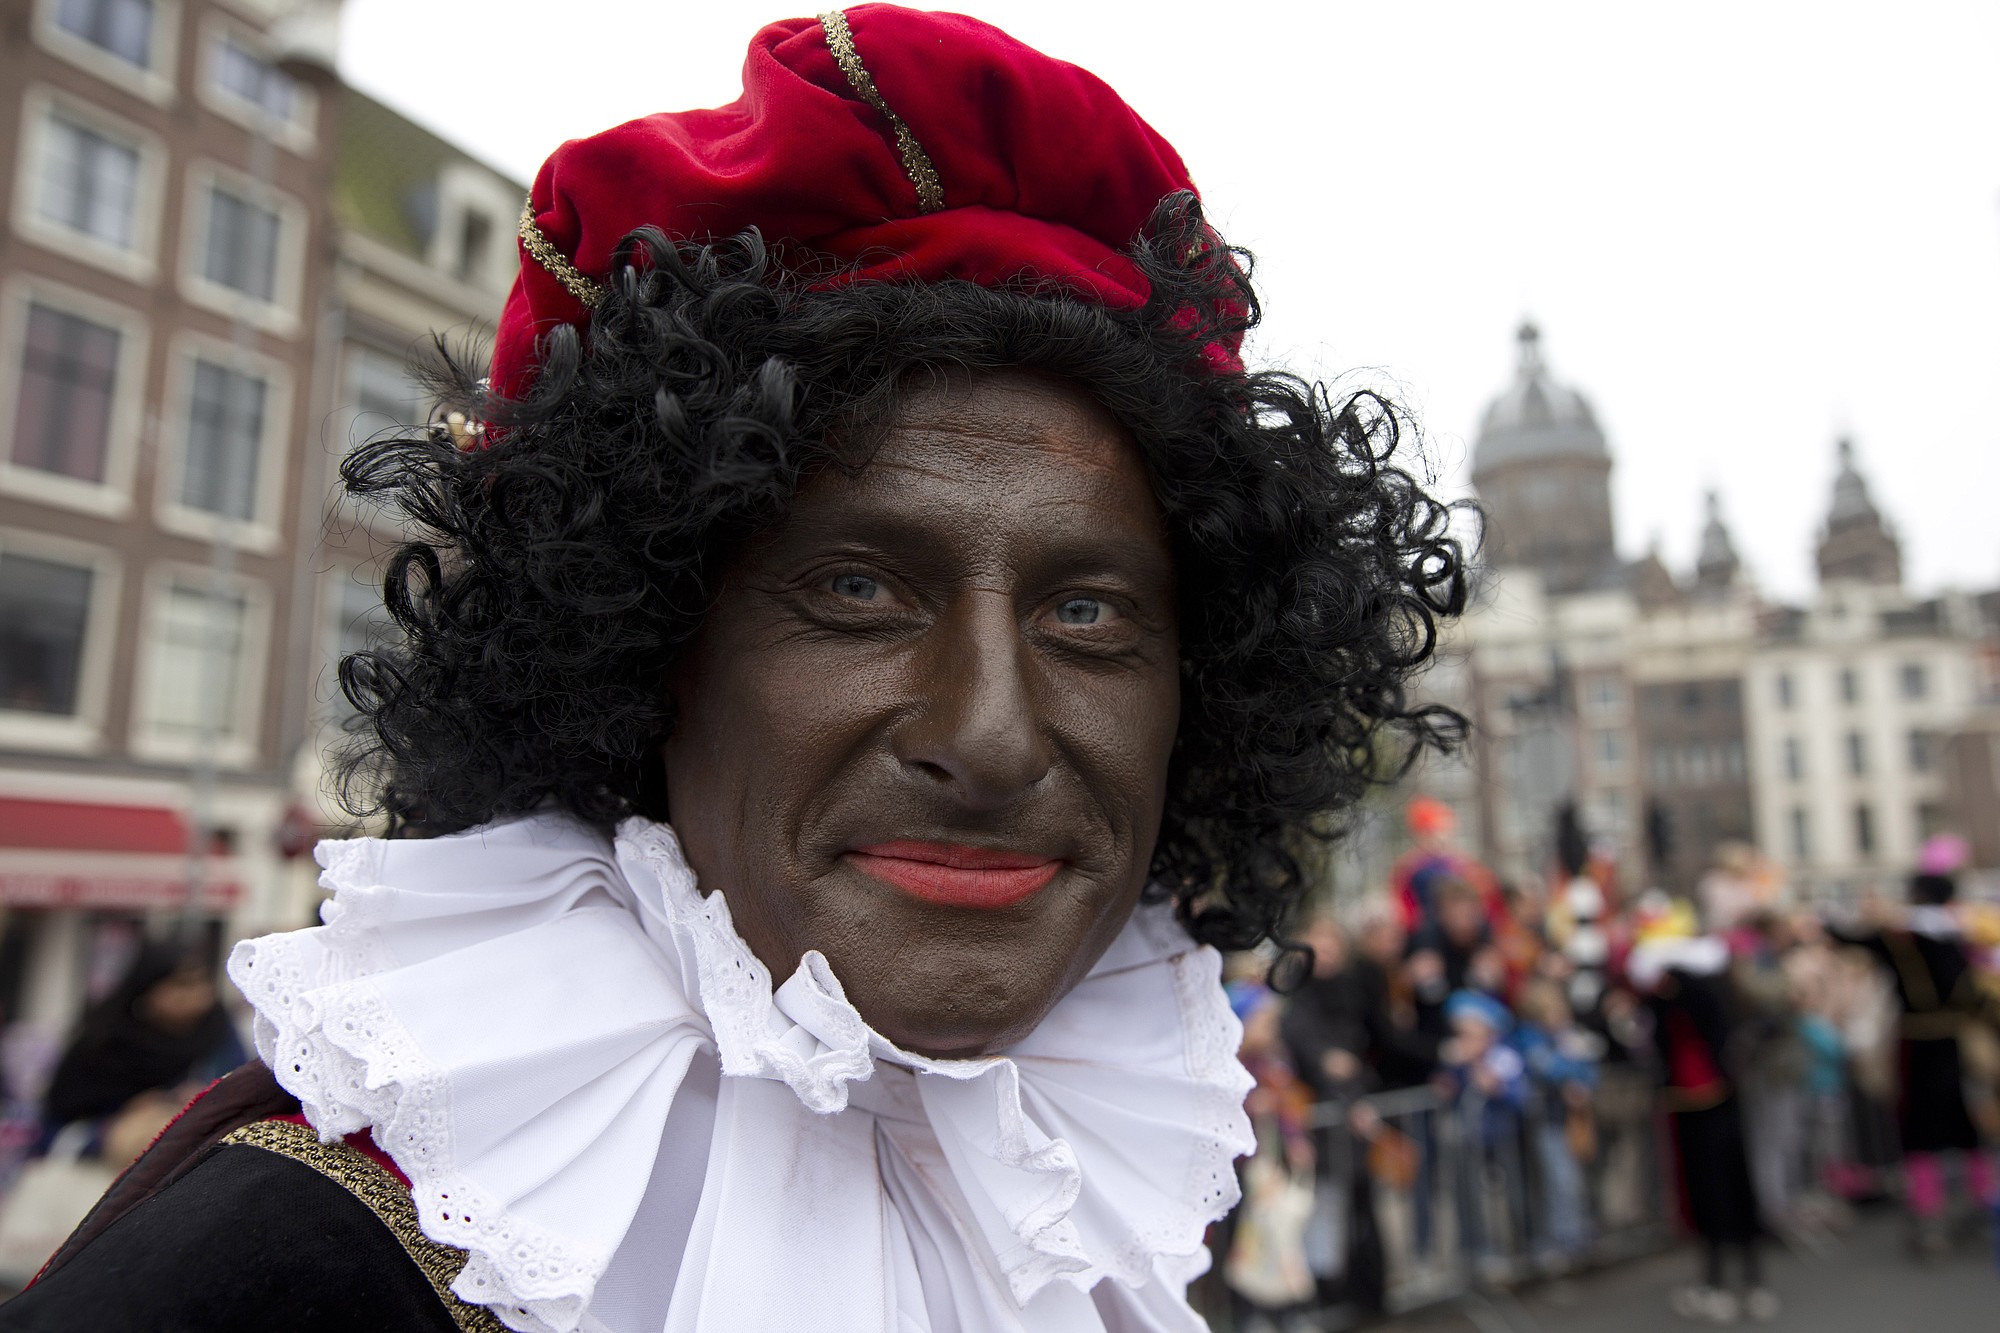 Dutch court Black Pete a negative stereotype The Columbian